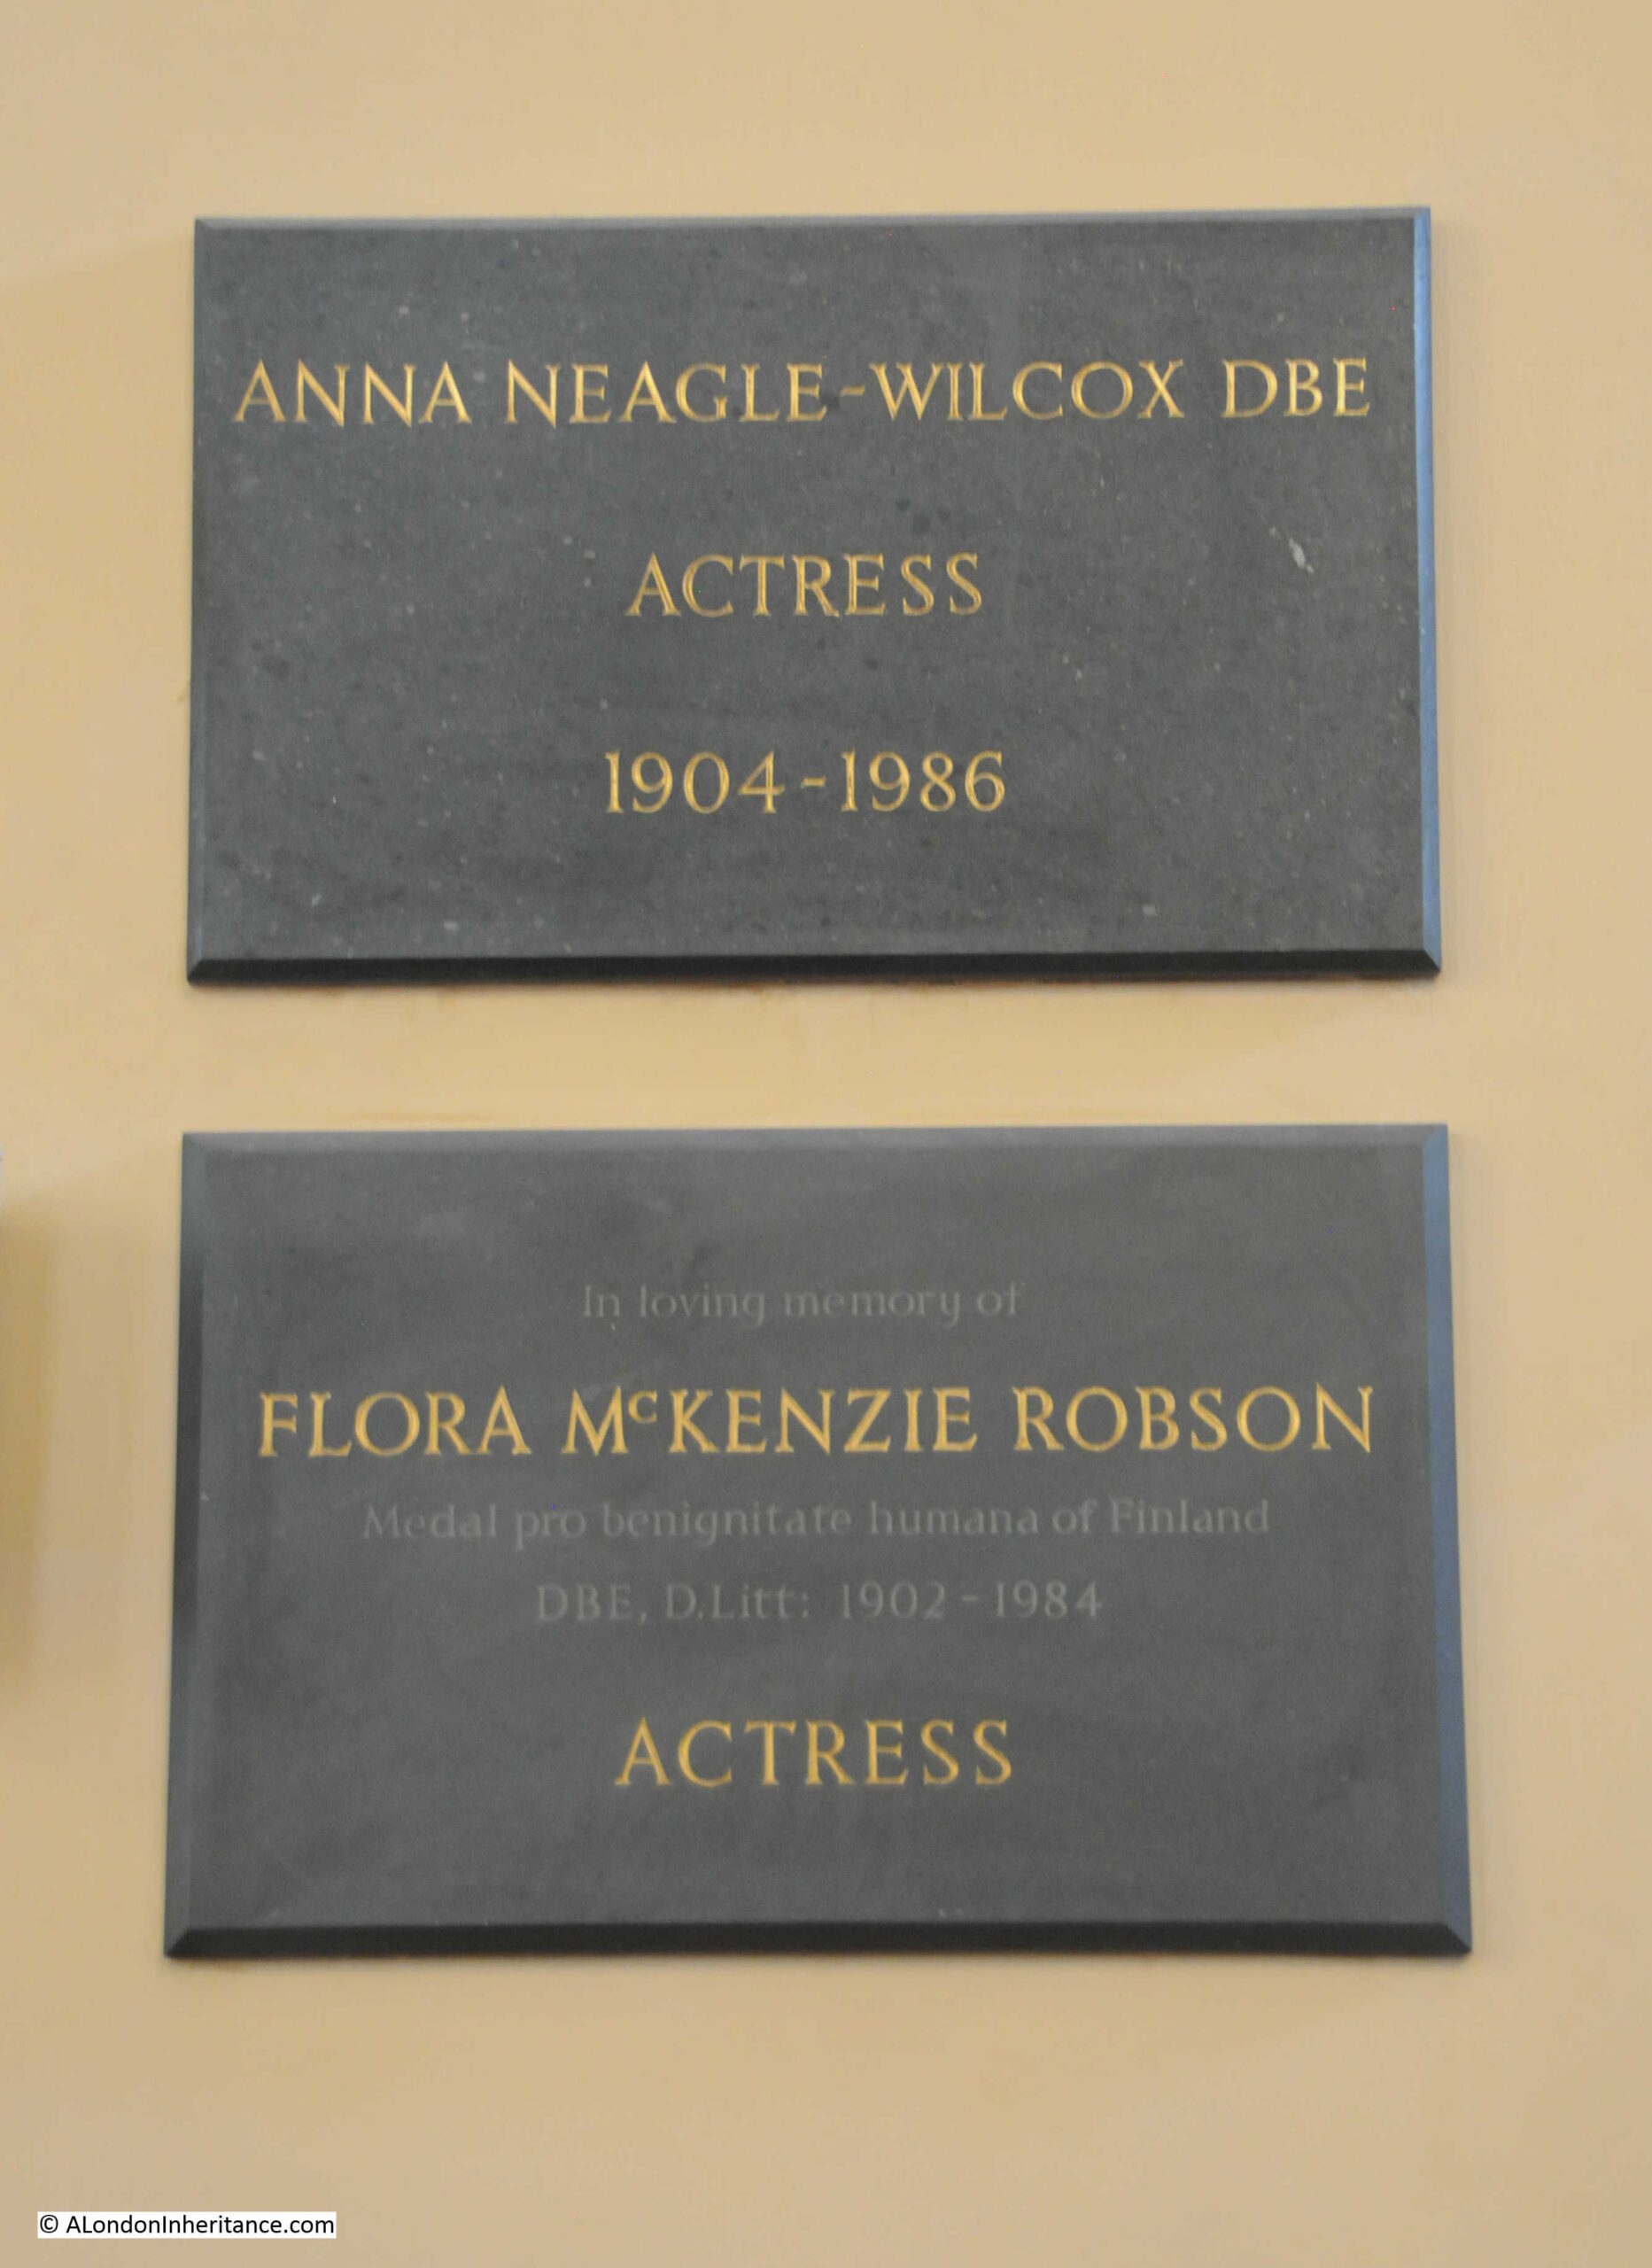 Anna Neagle memorial